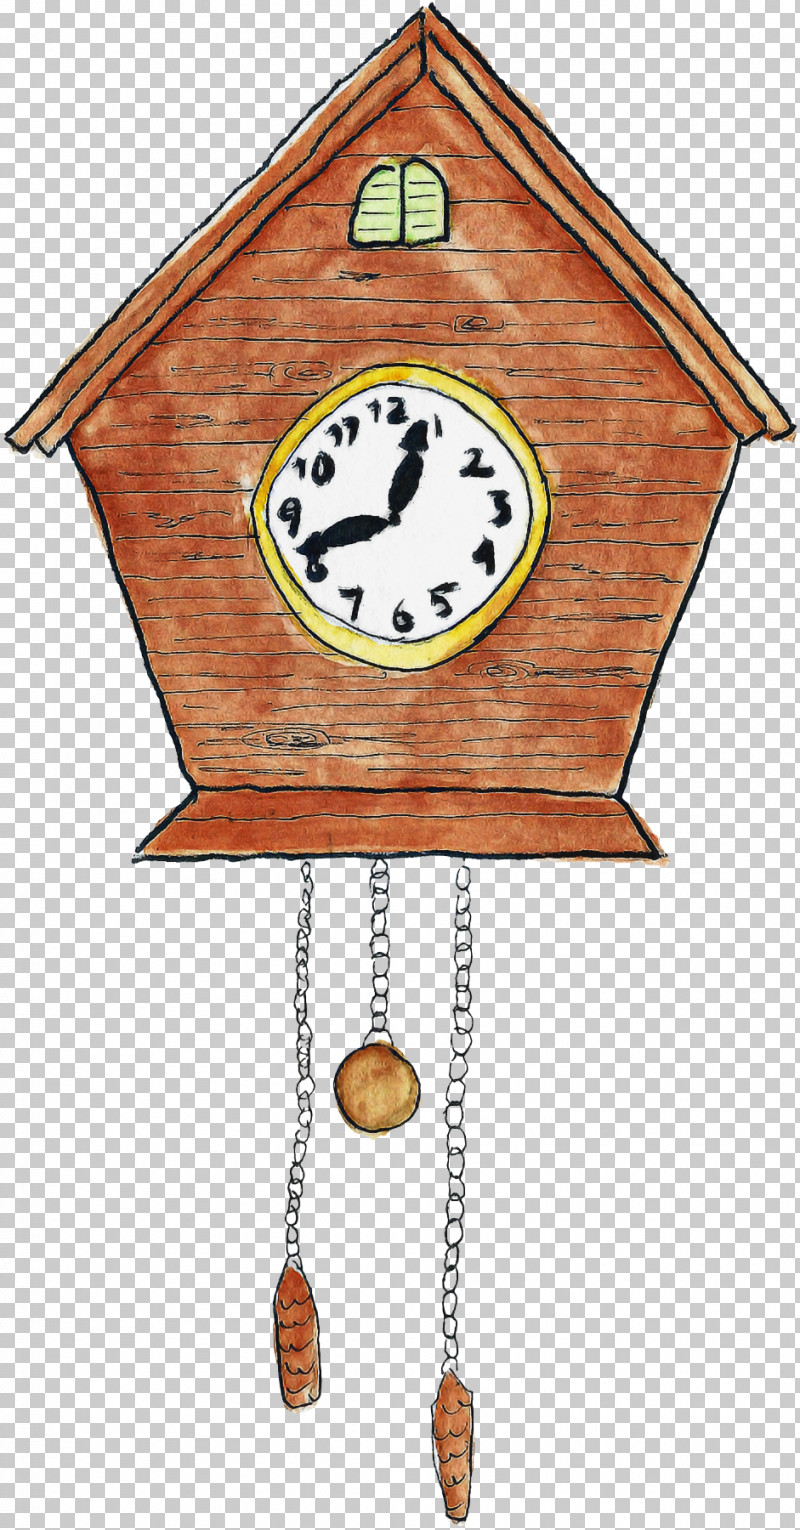 Clock Cuckoo Clock Wall Clock Furniture Home Accessories PNG, Clipart, Clock, Cuckoo Clock, Furniture, Home Accessories, Interior Design Free PNG Download